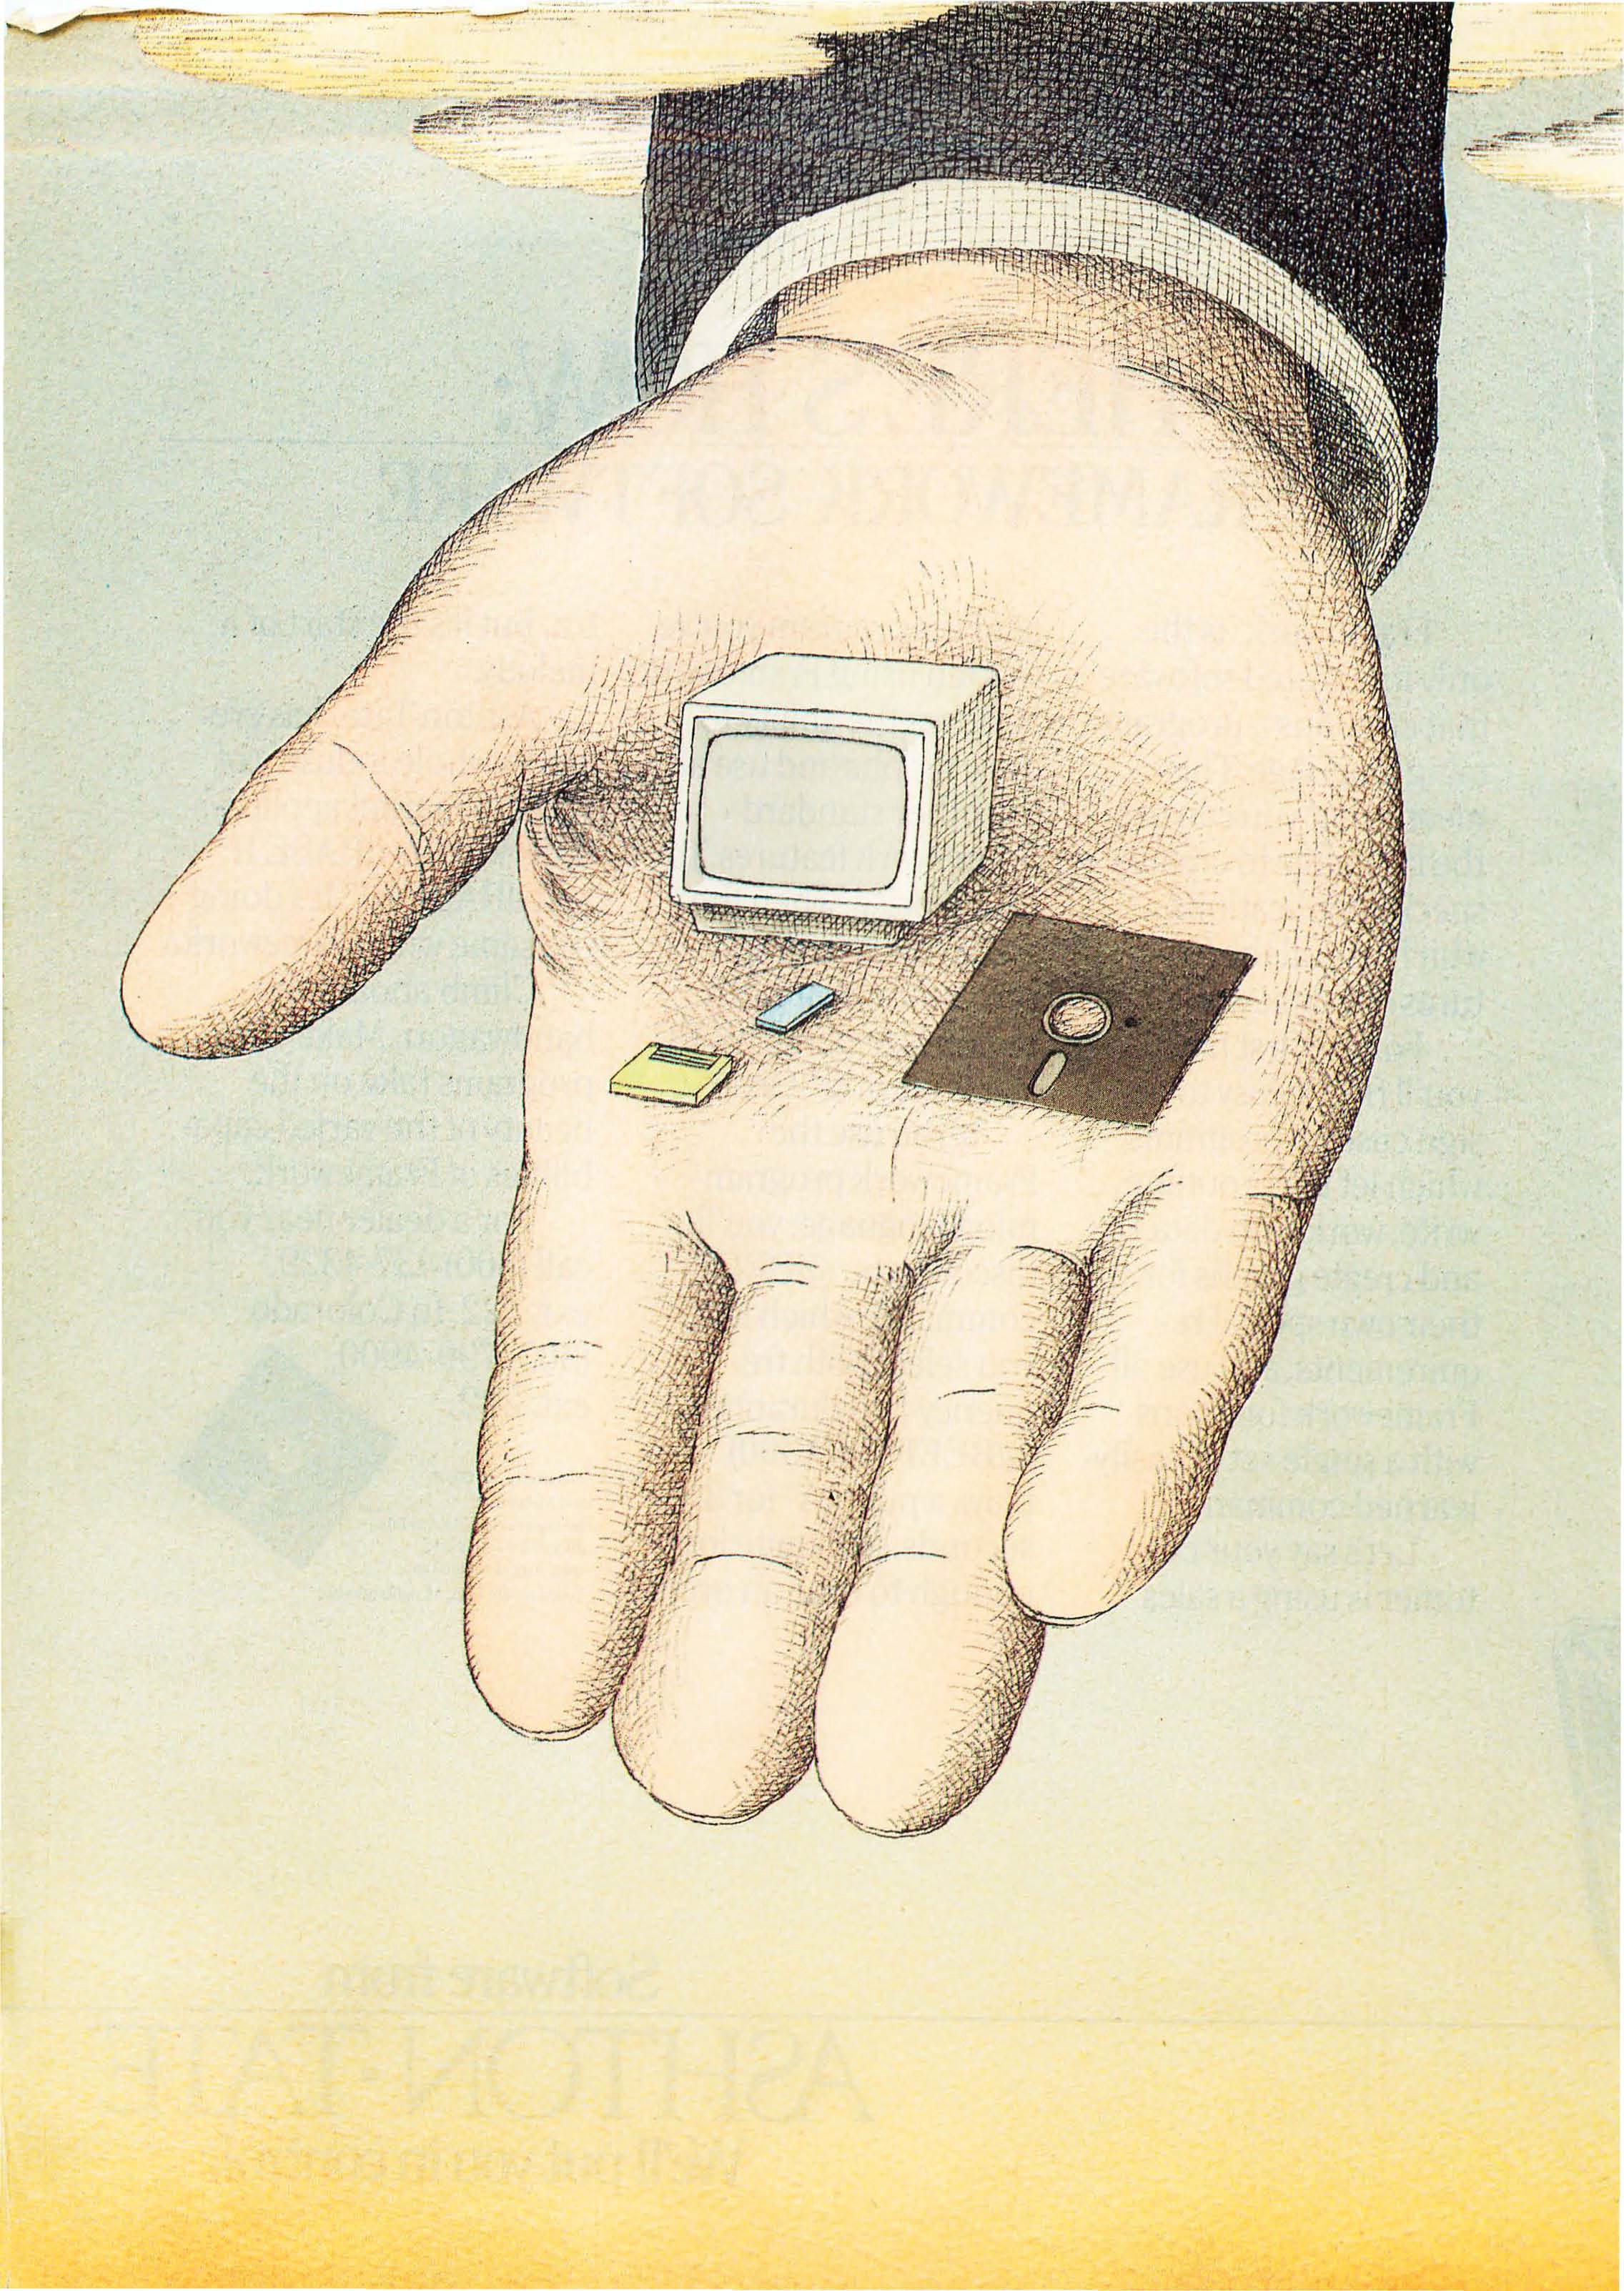 Mel Furukawa, section illustration from Byte Magazine